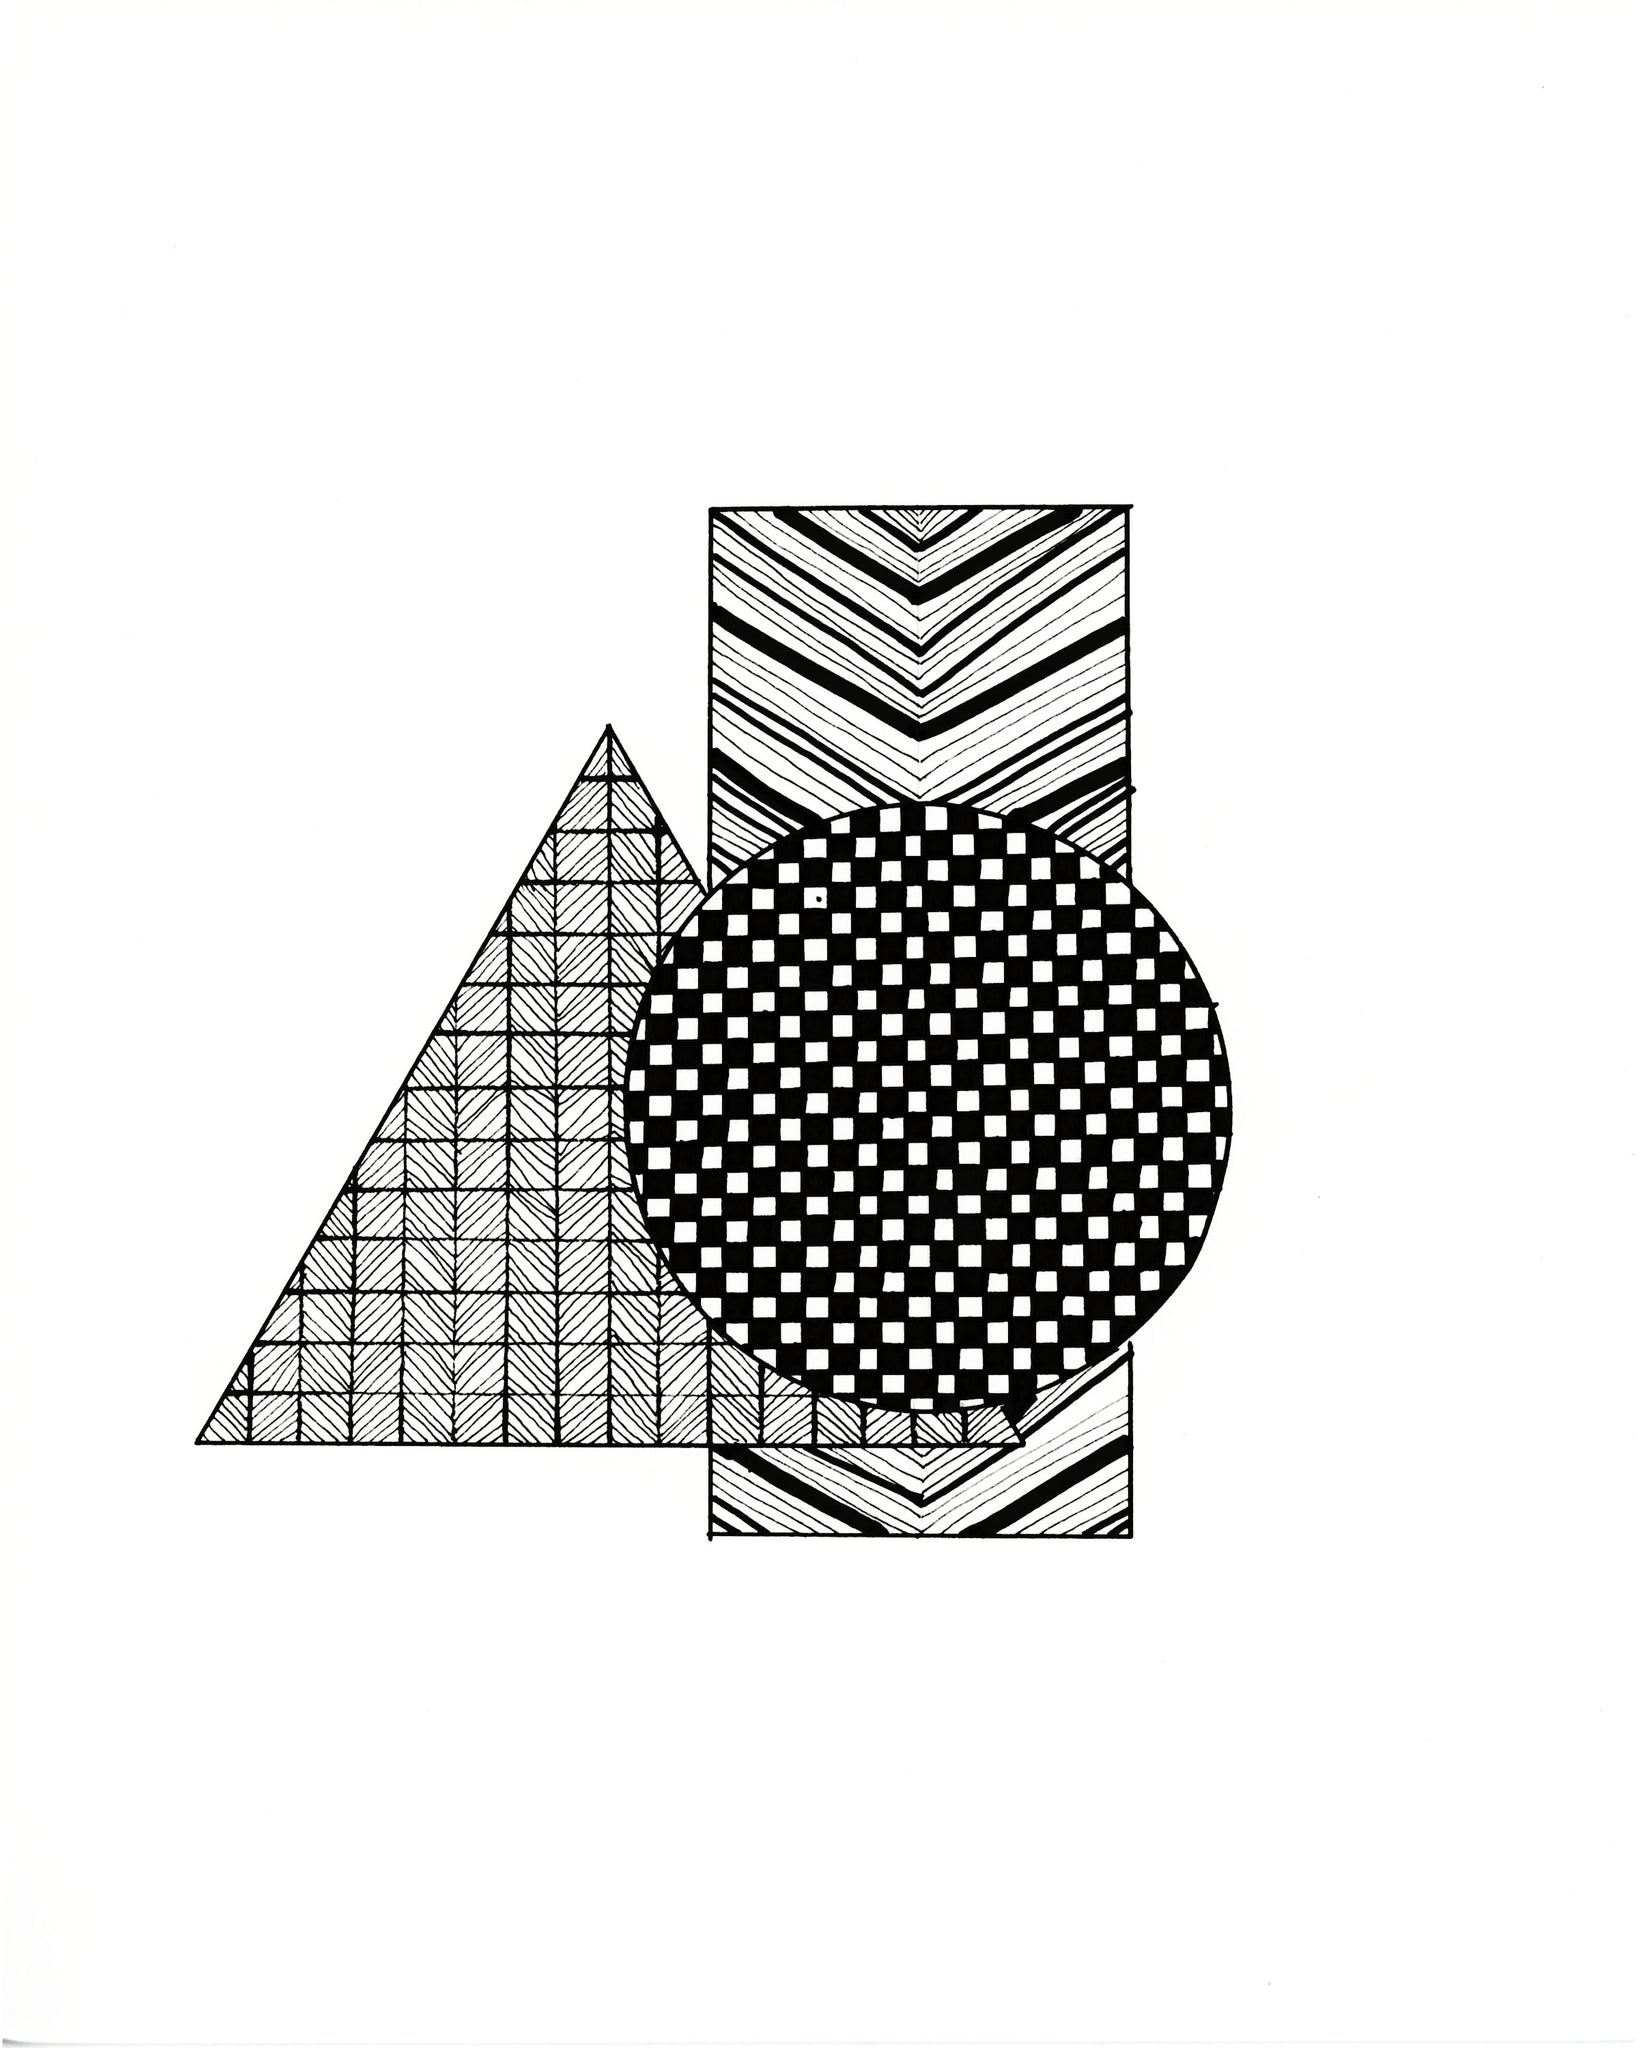 Black and White Geometric Patterns